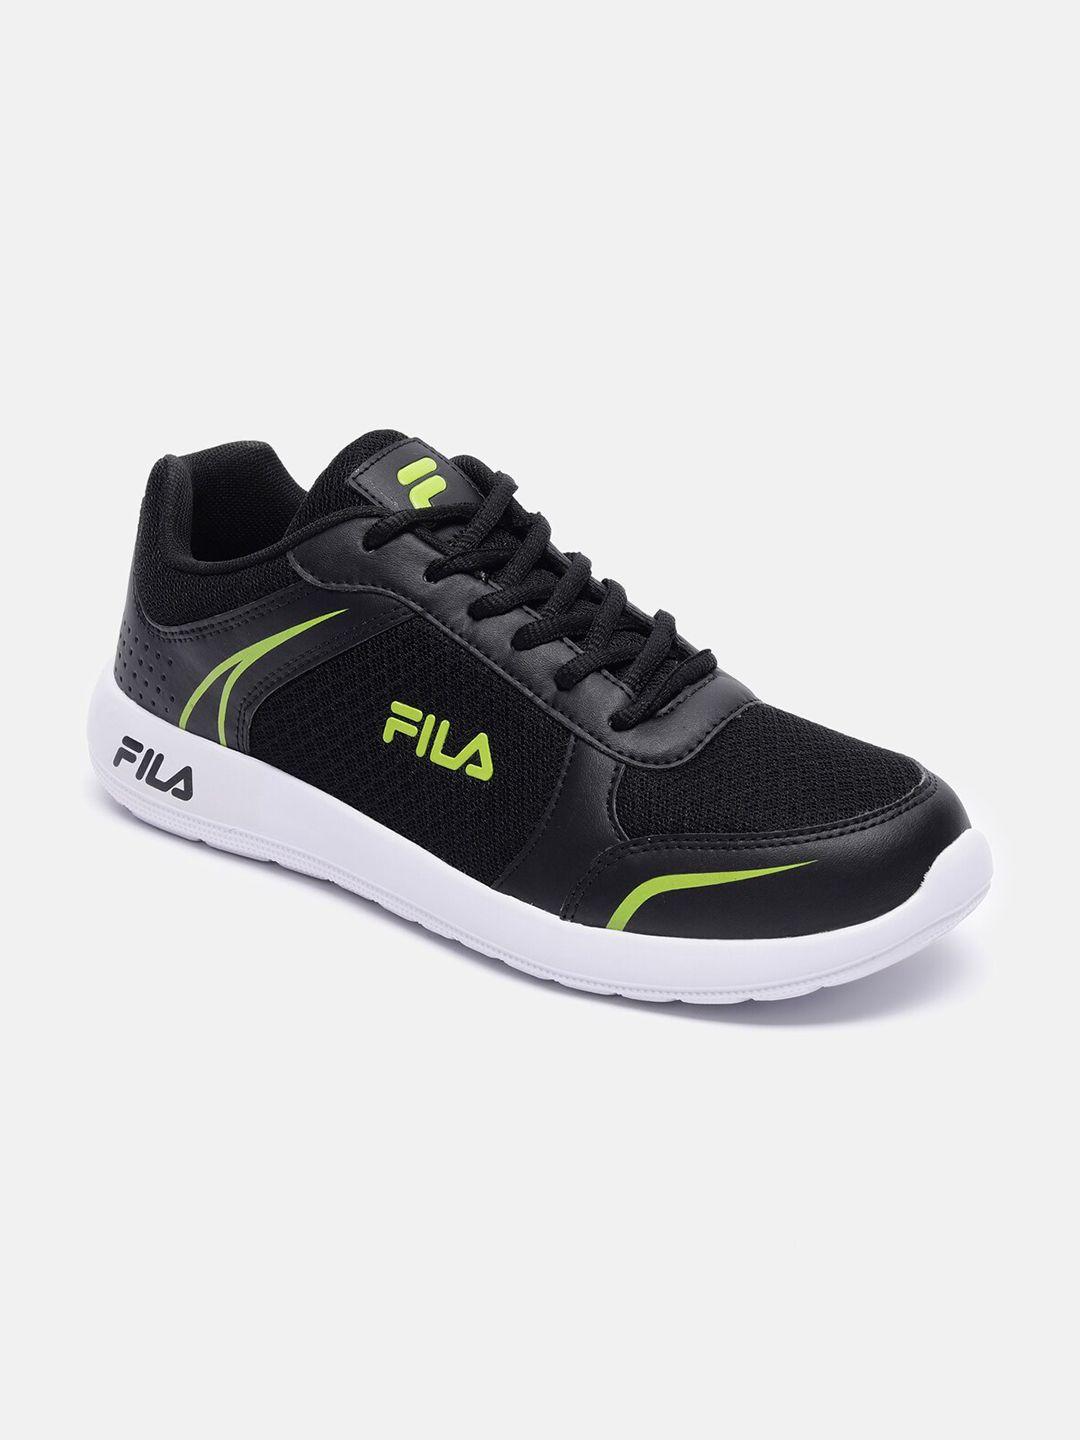 fila men black running non-marking gollar shoes